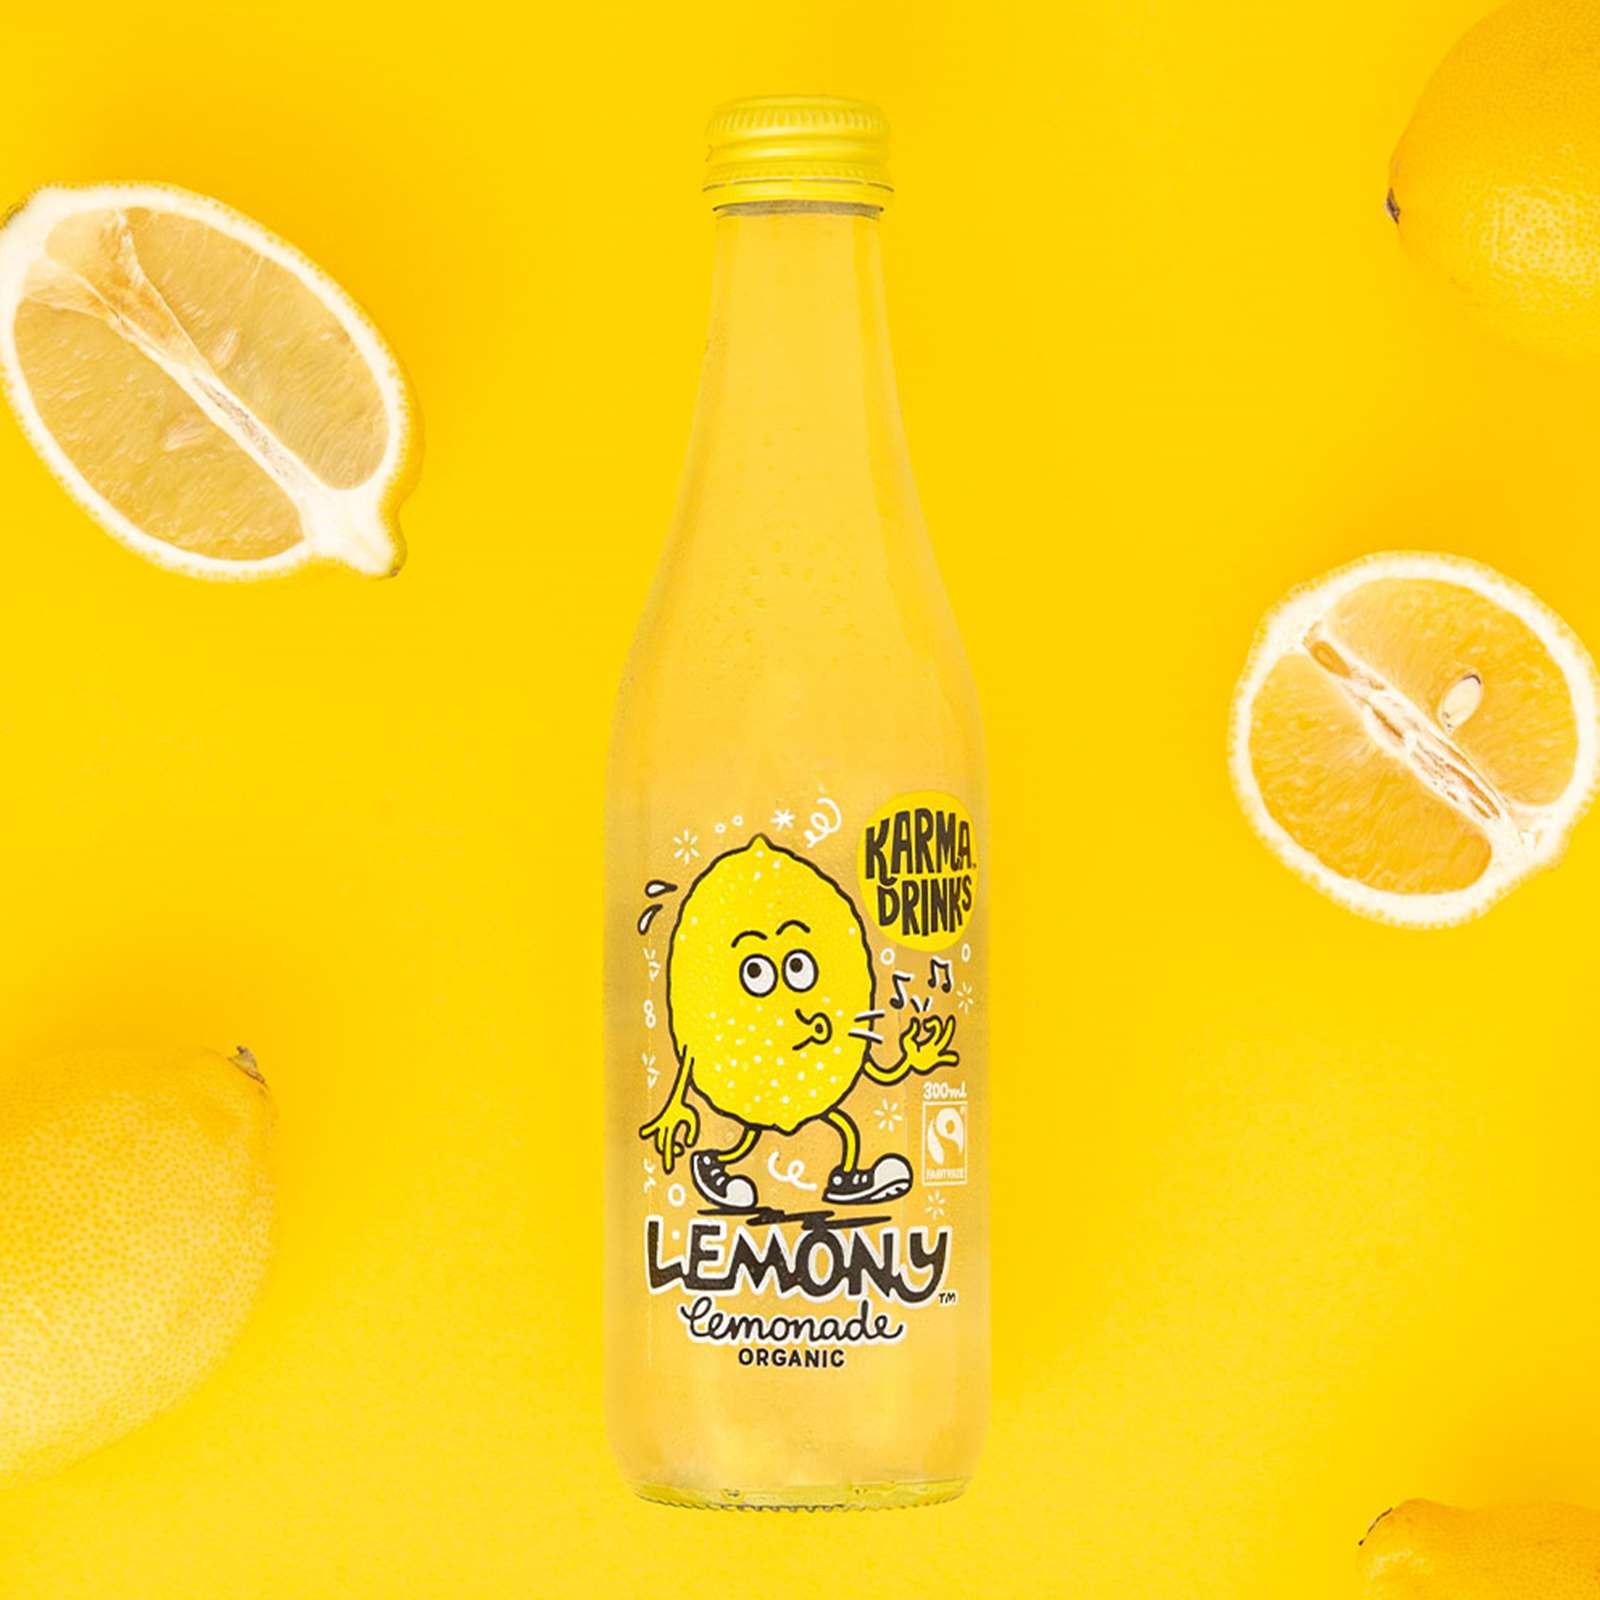 Lemony lemonade